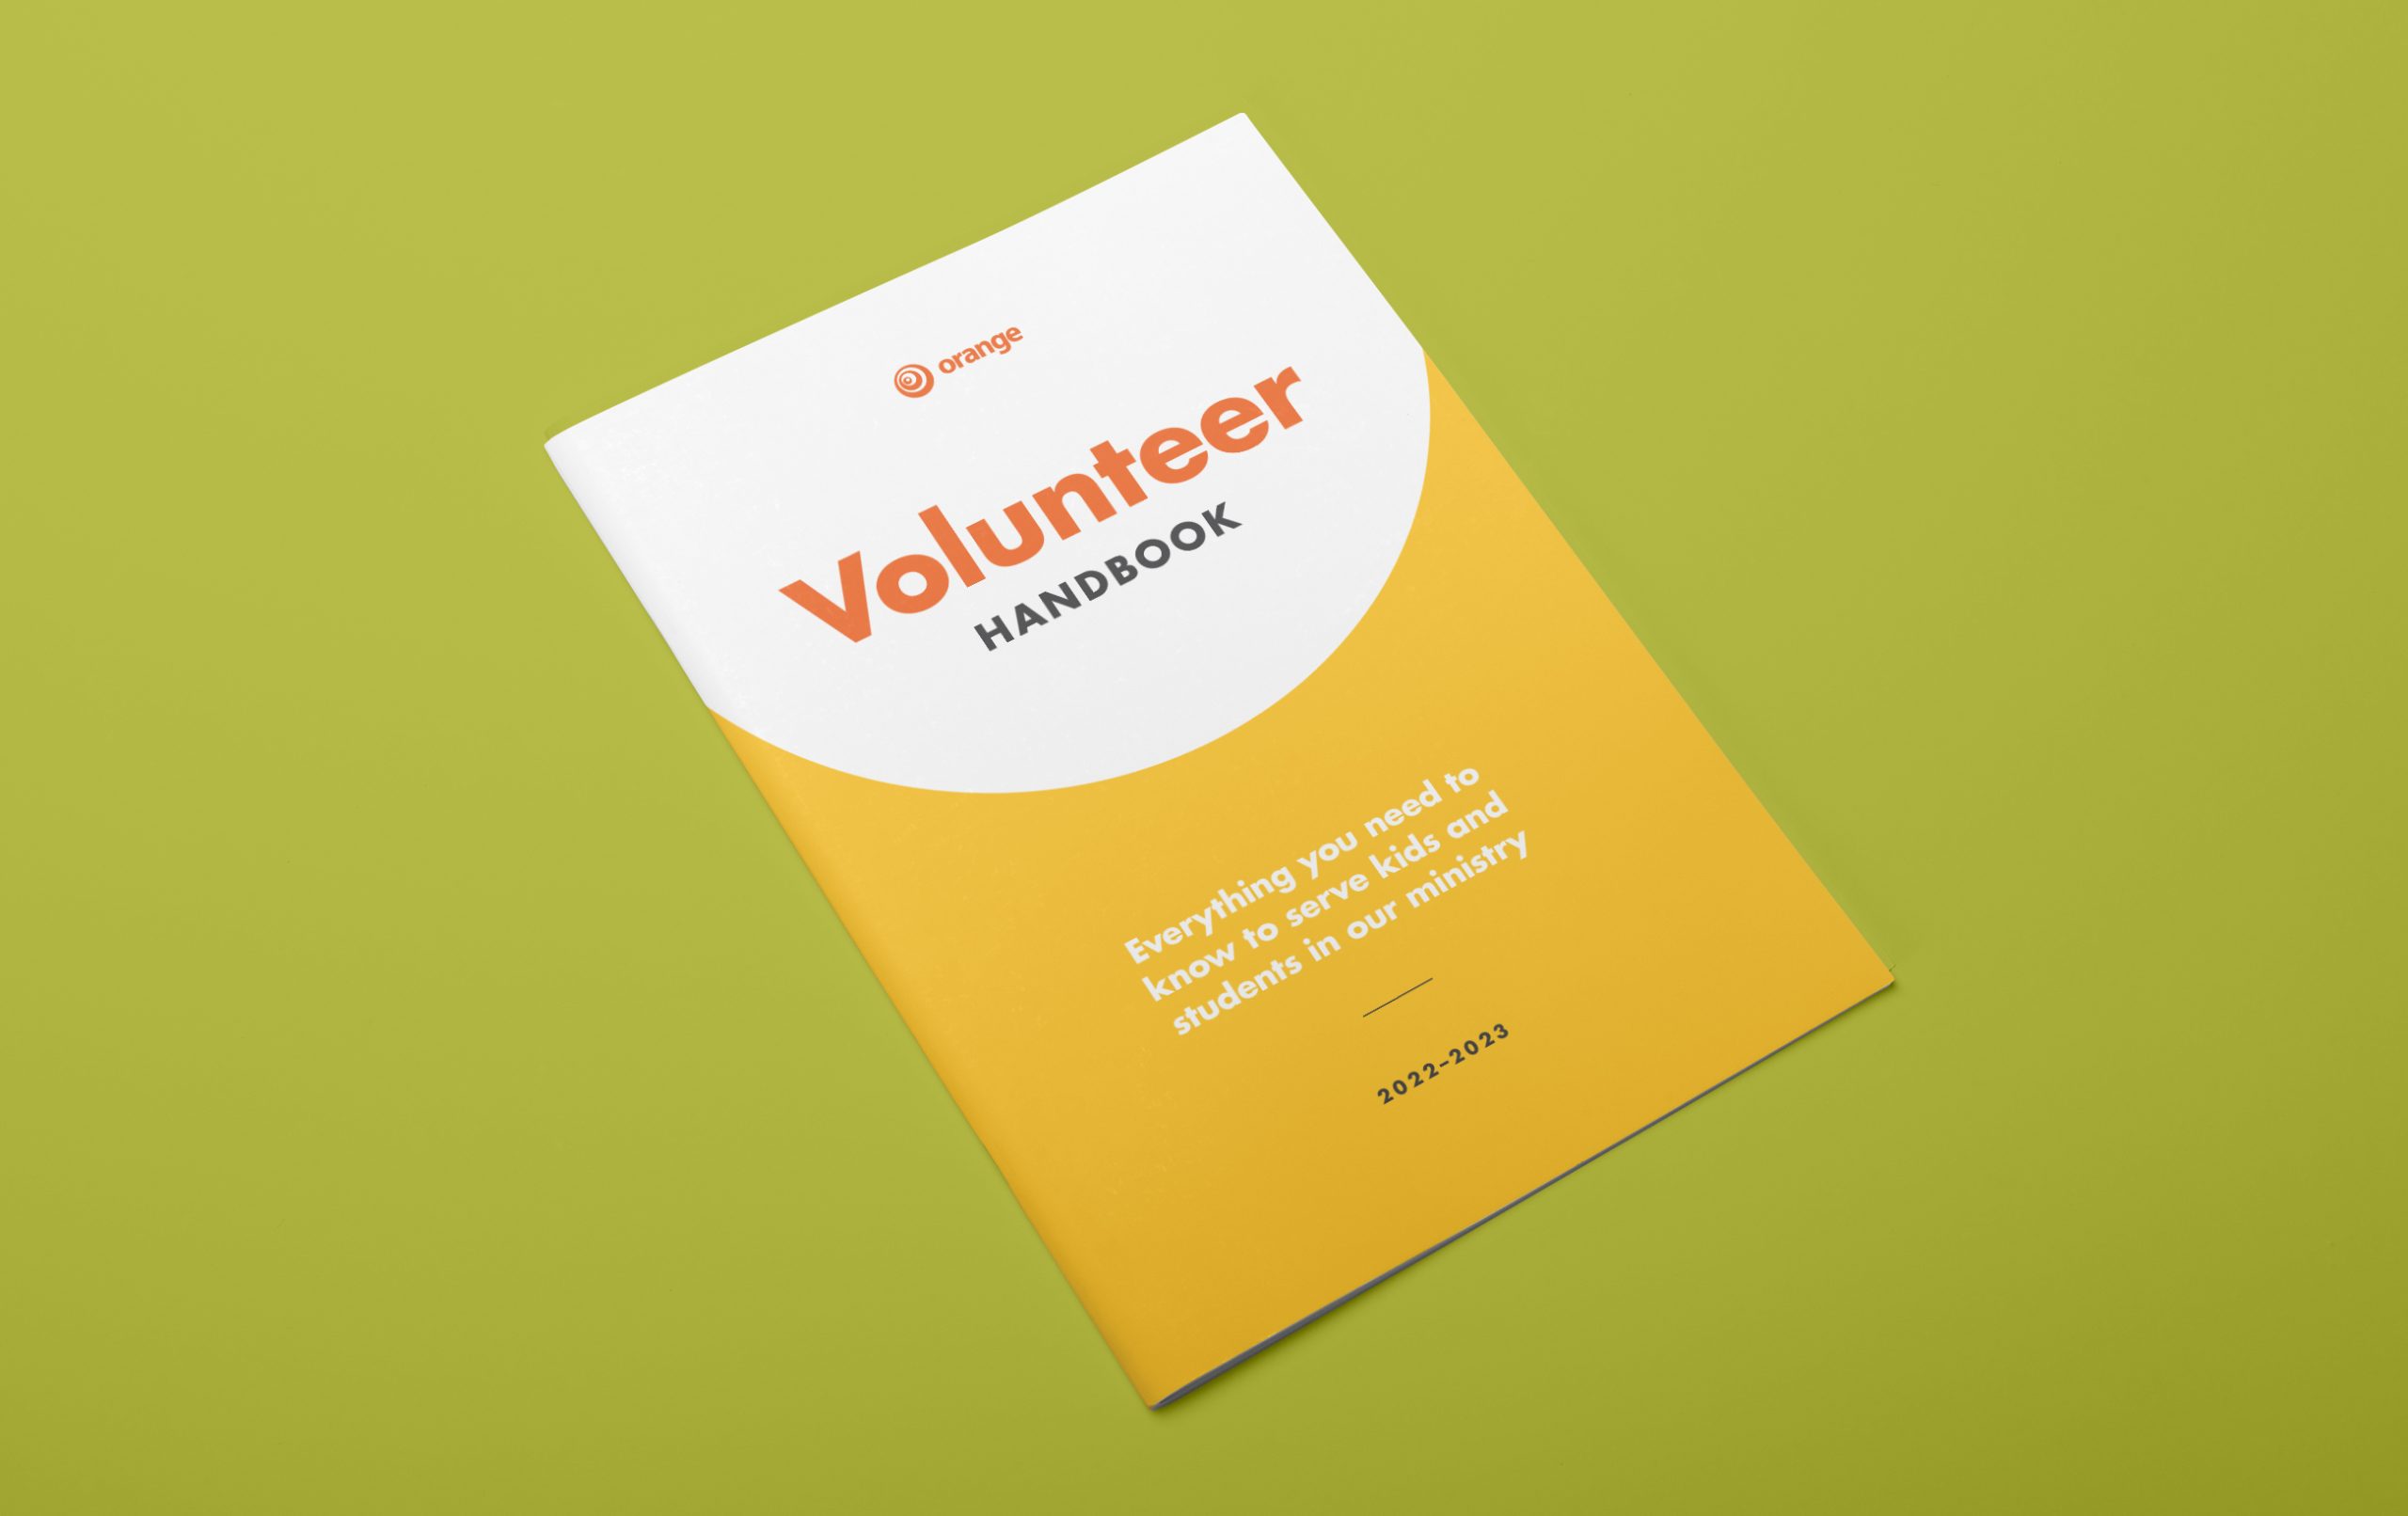 Volunteer Handbook 2022-2023